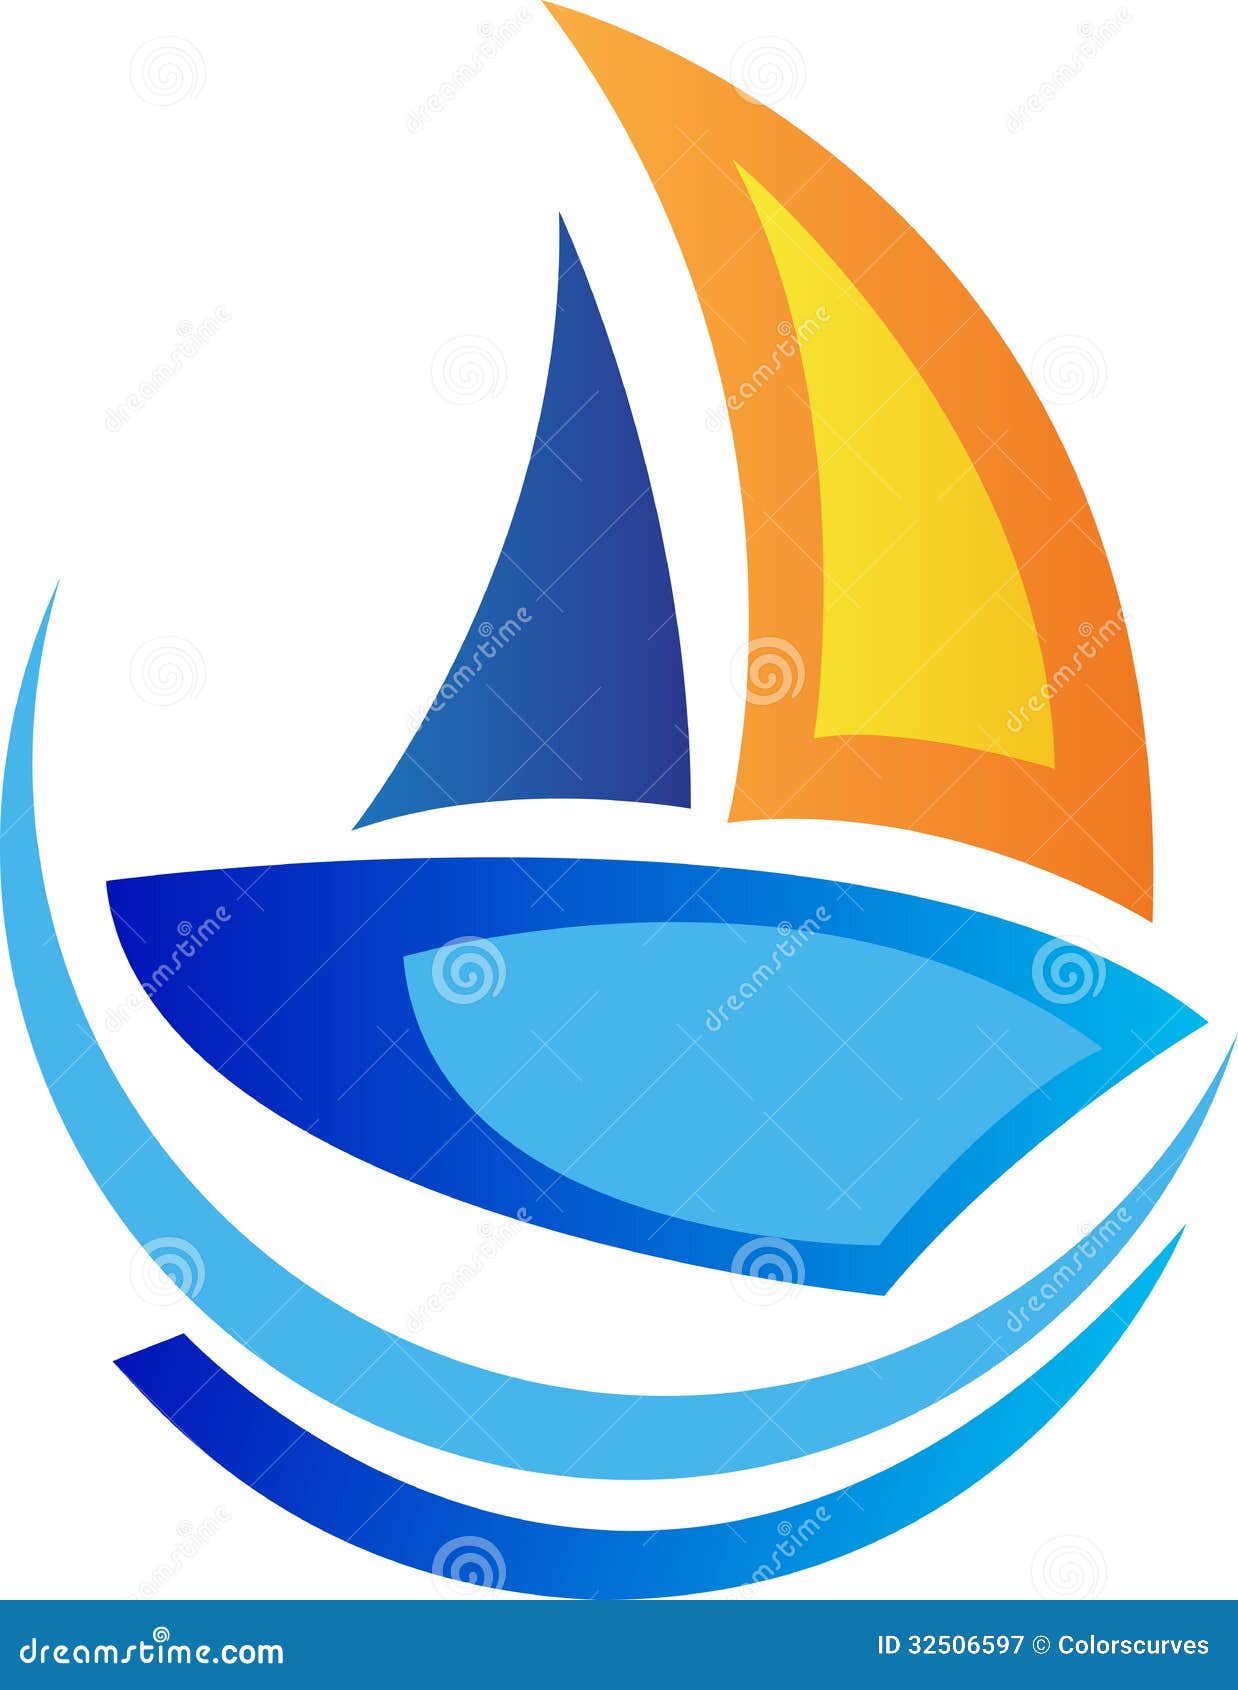 sailing boat logo royalty free stock photography - image